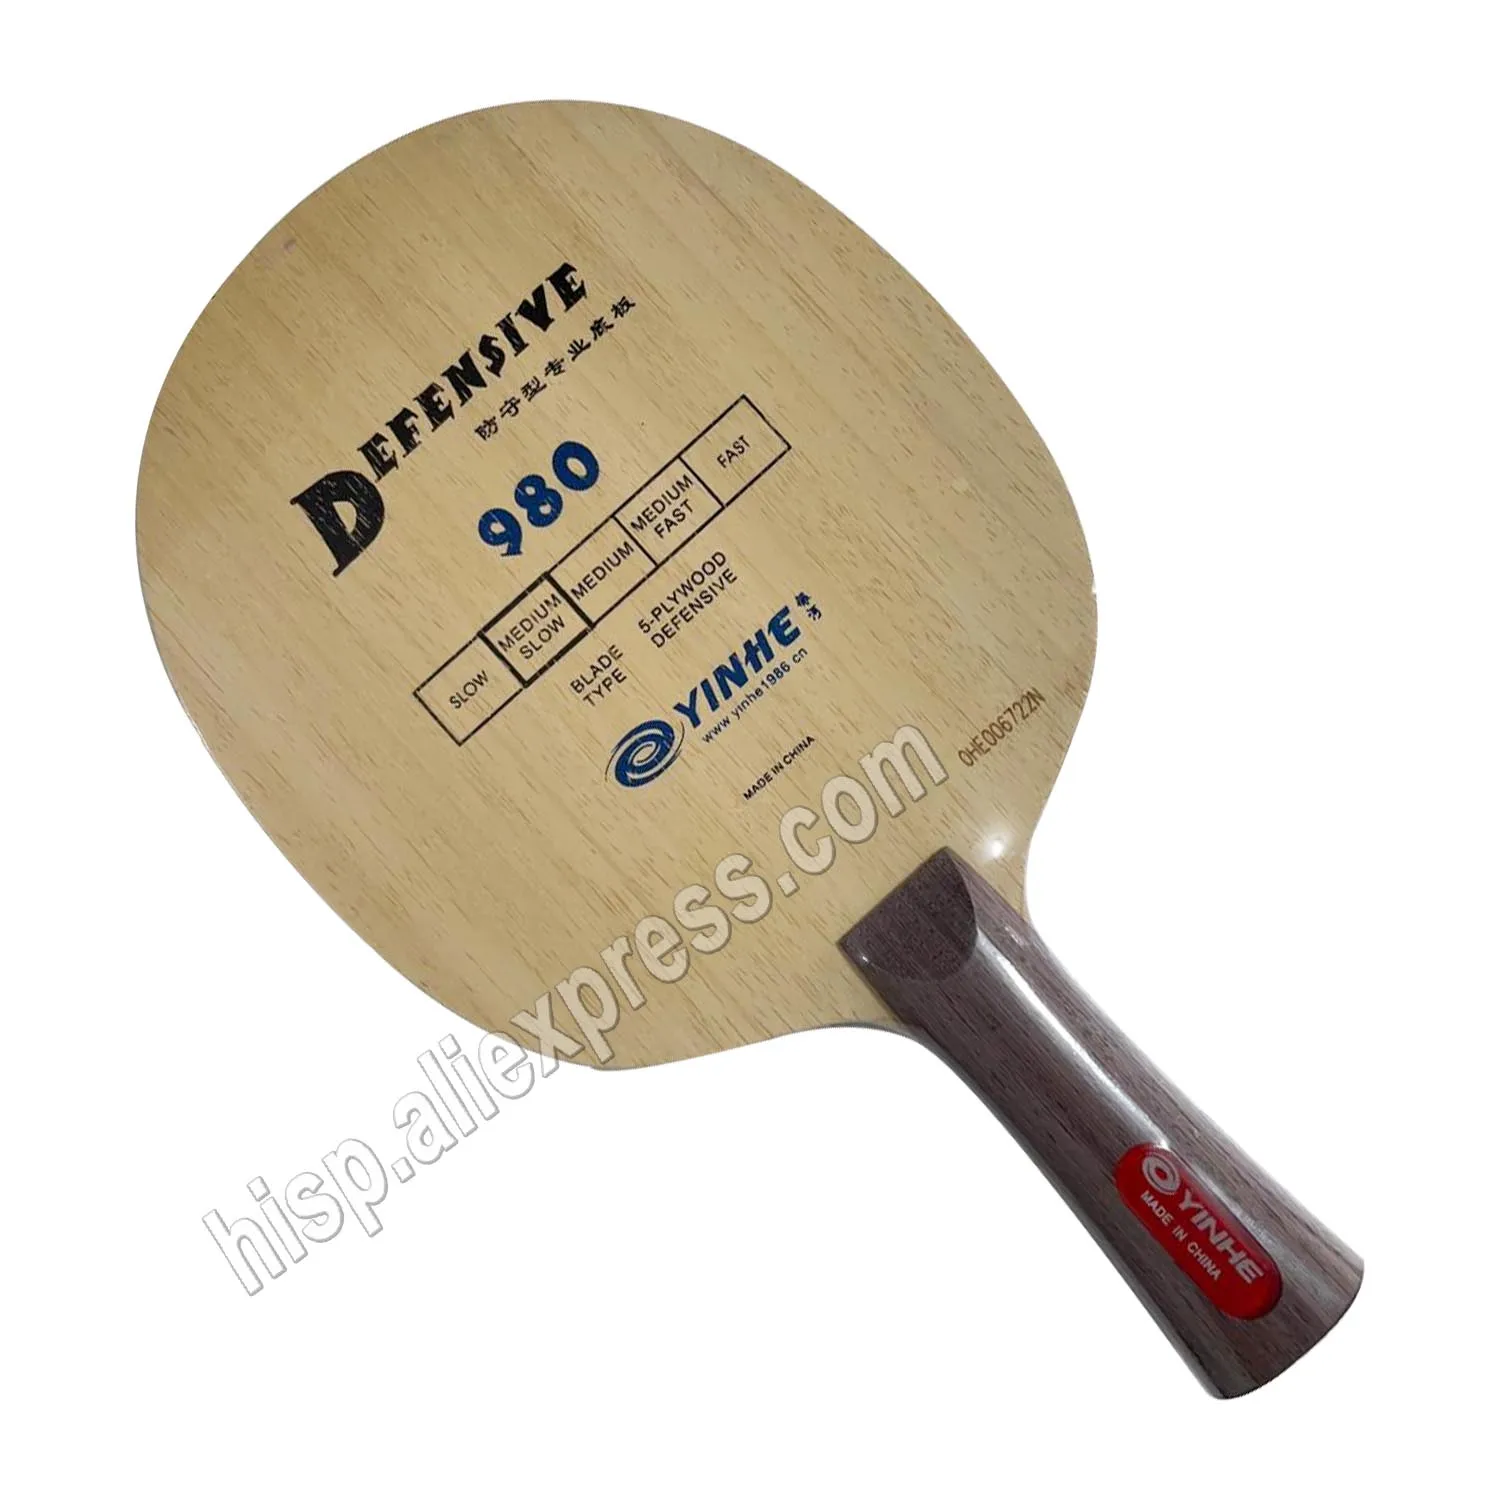 Yinhe / Milky Way / Galaxy 980 Defensive table tennis / pingpong blade